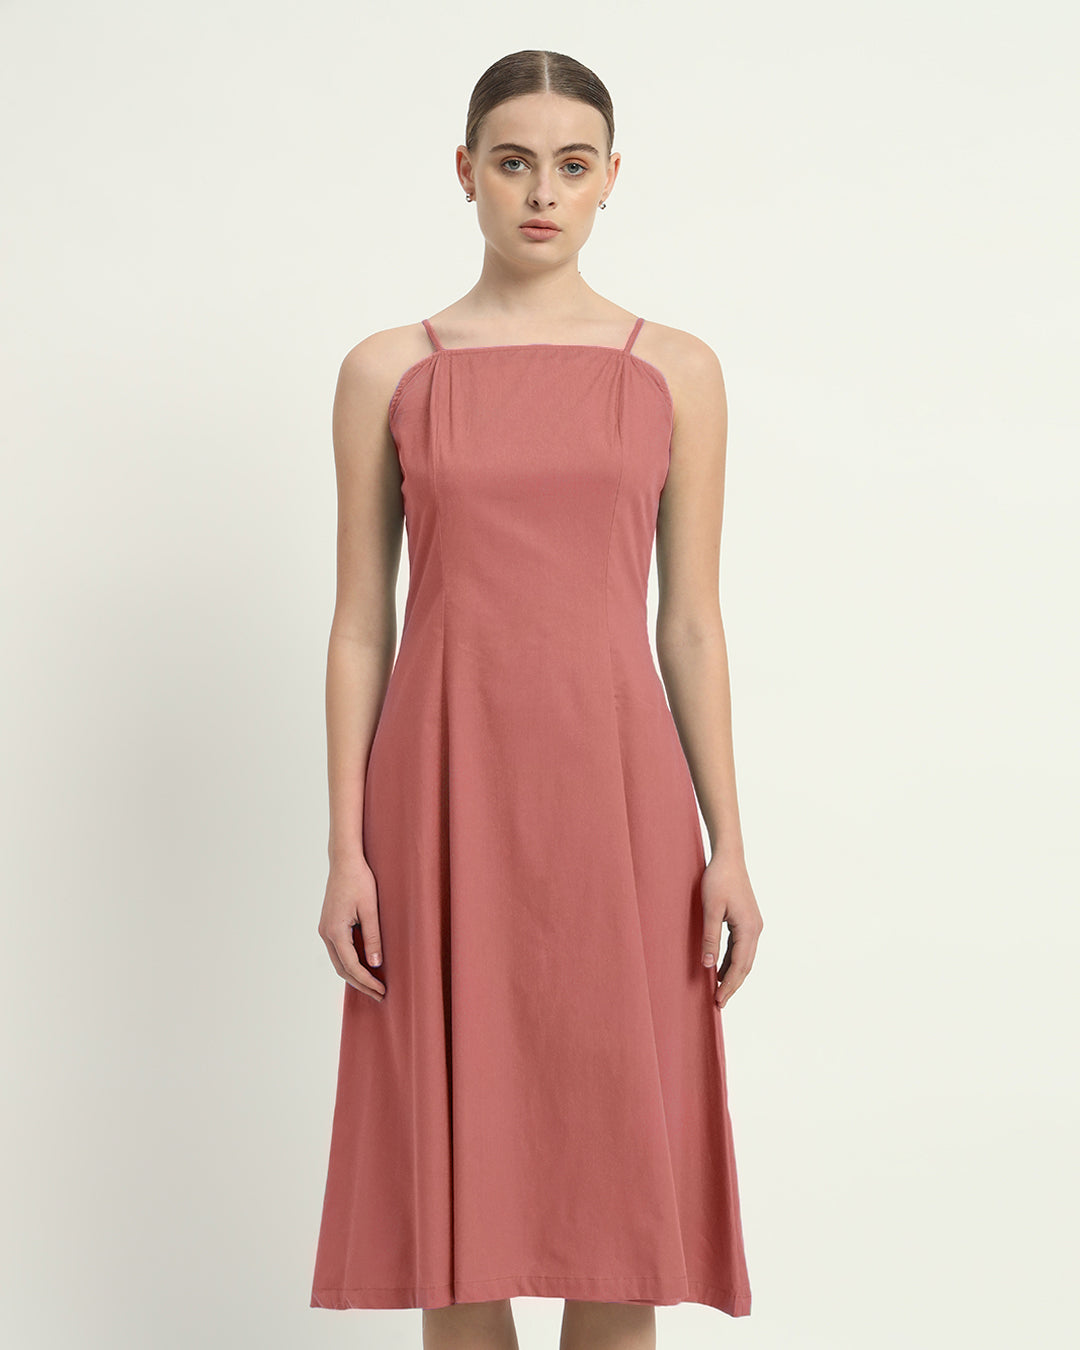 The Ivory Pink Valatie Cotton Dress